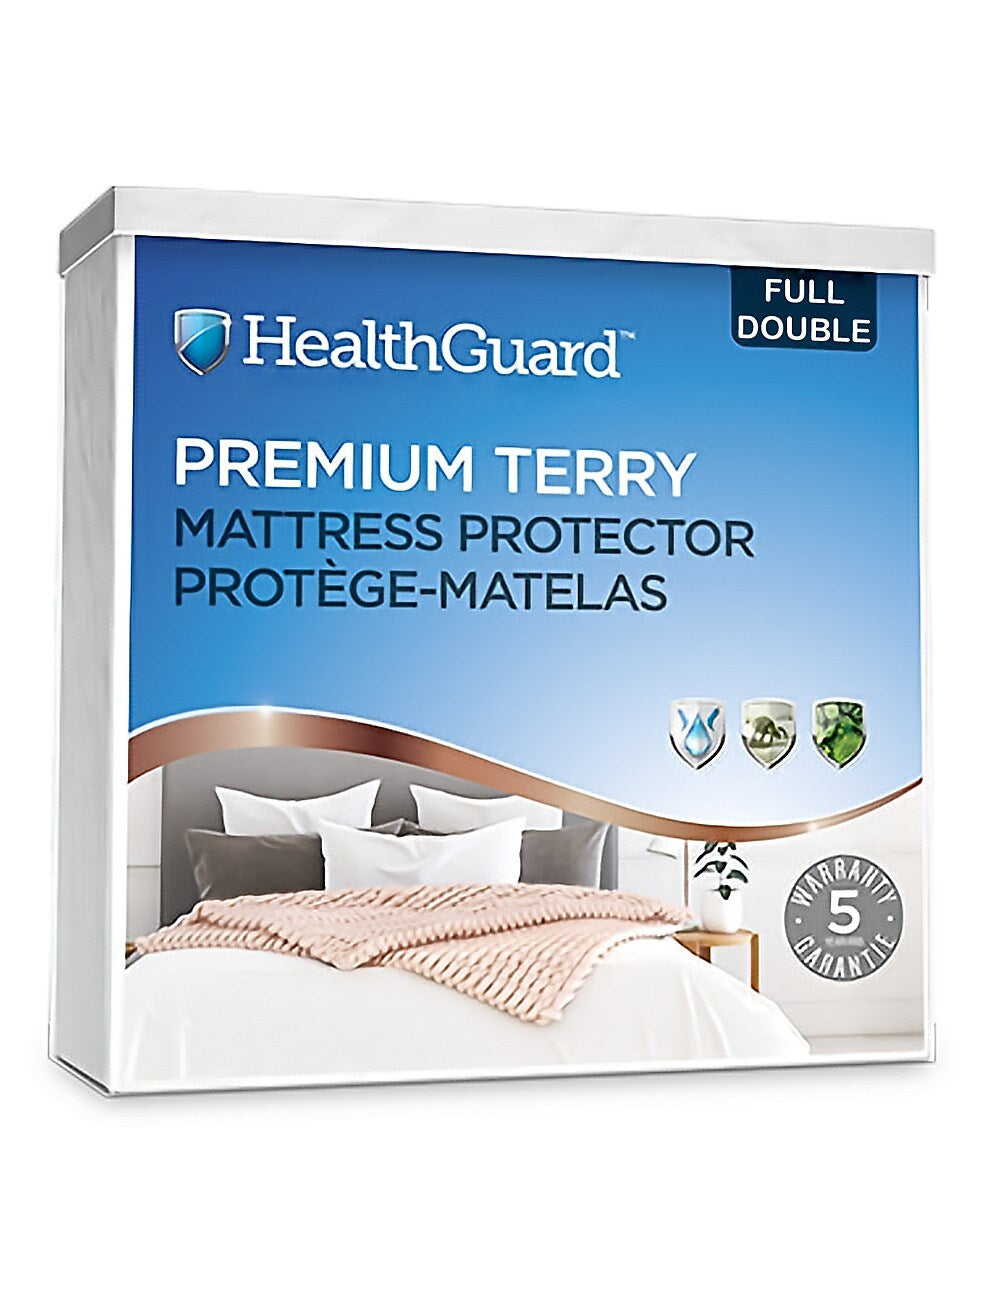 HealthGuard Premium Terry Double/Full Mattress Protector